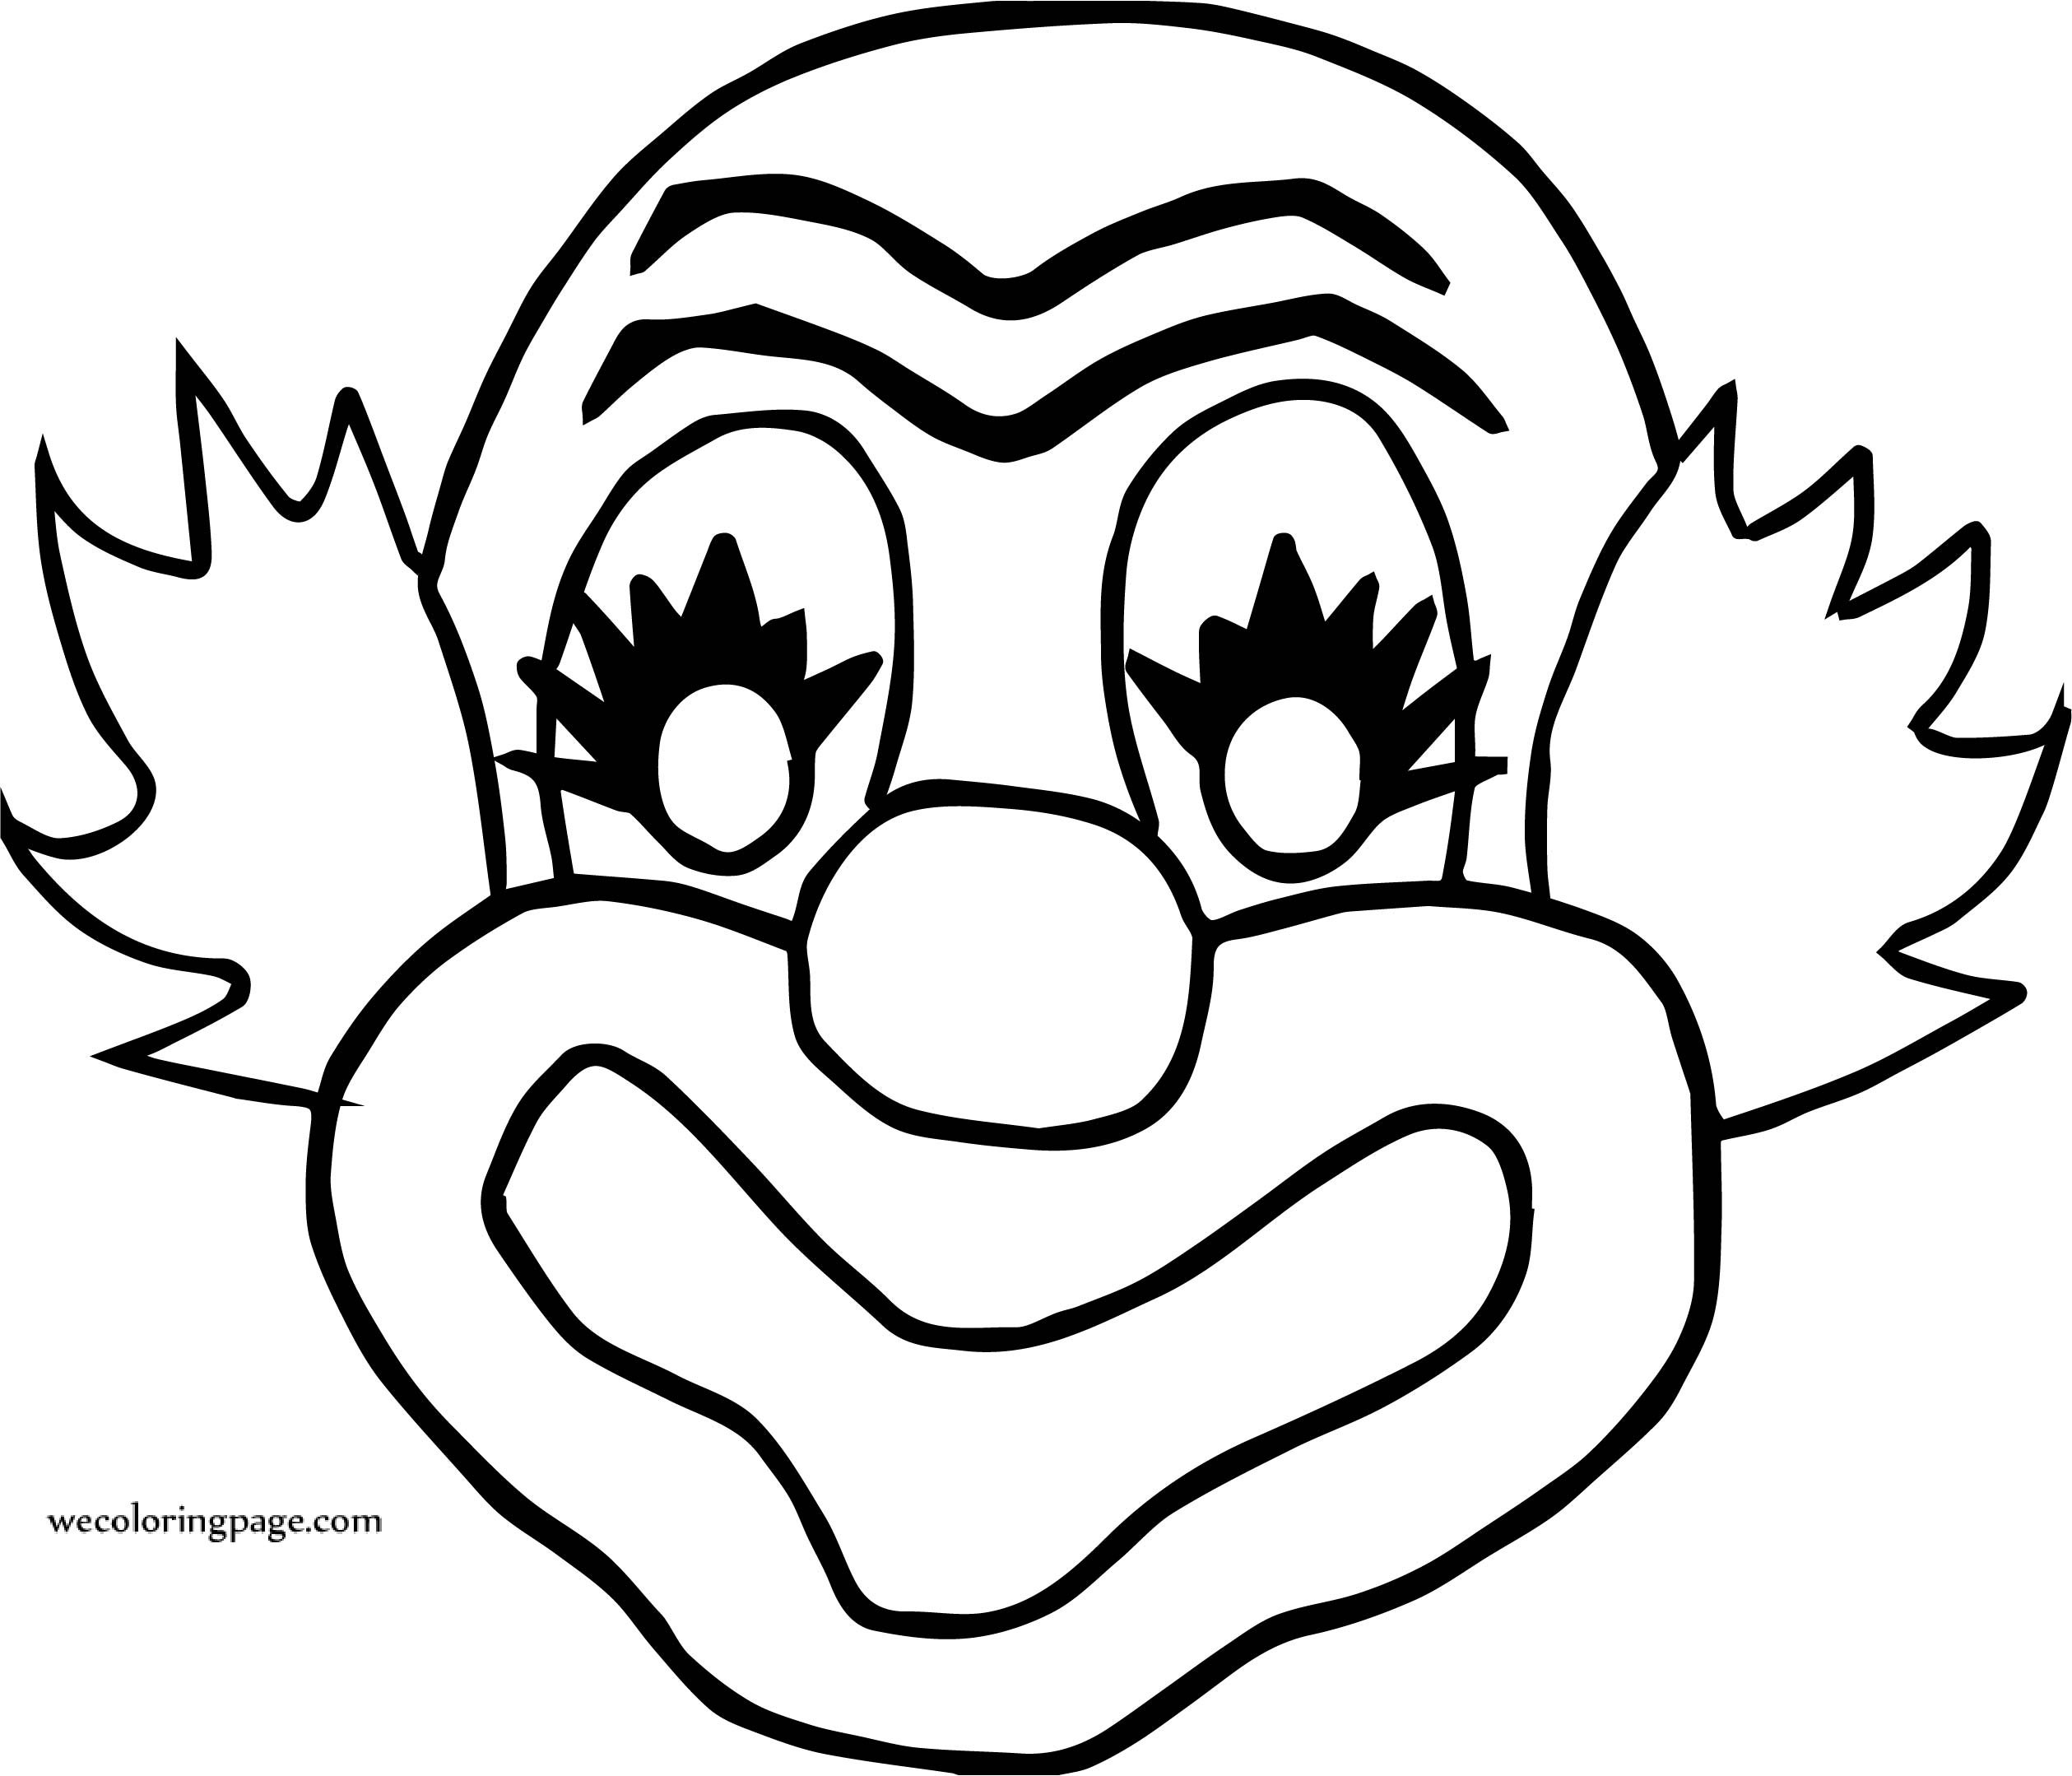 Шаблон маски клоуна распечатать. Маска клоуна раскраска. Маска клоун раскраска для детей. Рисование маска клоуна. Лицо клоуна раскраски для детей.